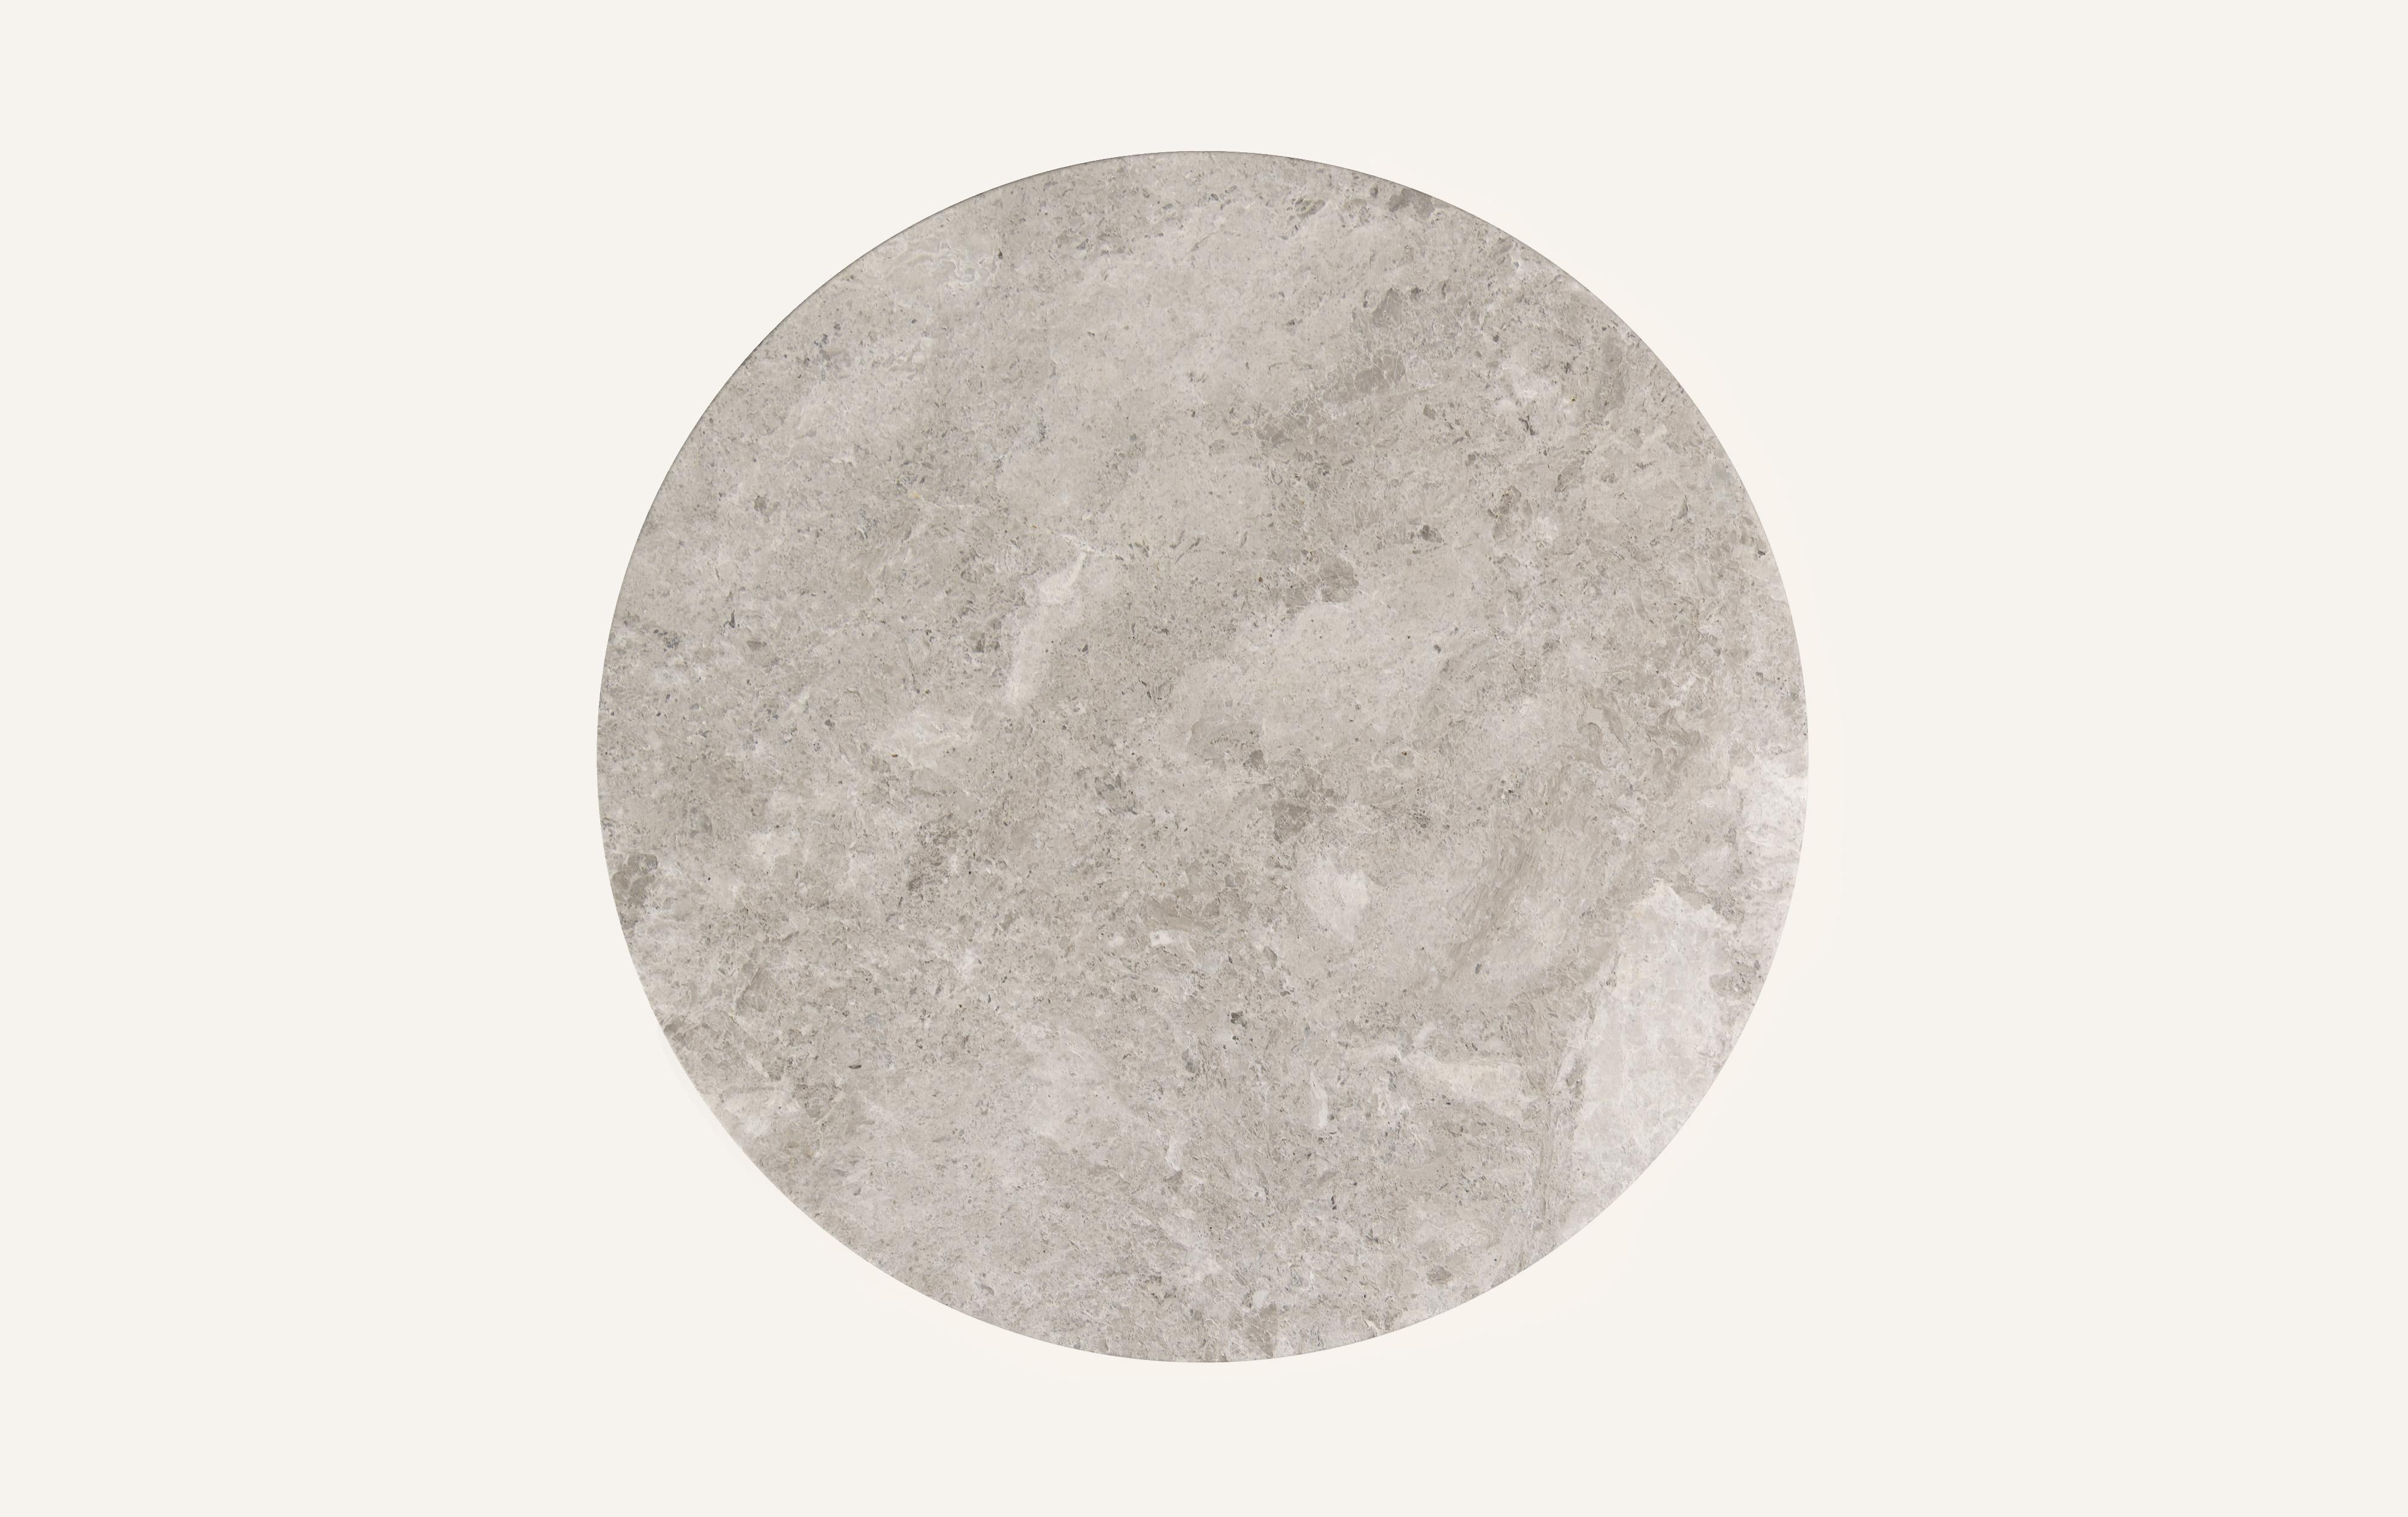 American FORM(LA) Cono Round Dining Table 48”L x 48”W x 30”H Tundra Gray Marble For Sale